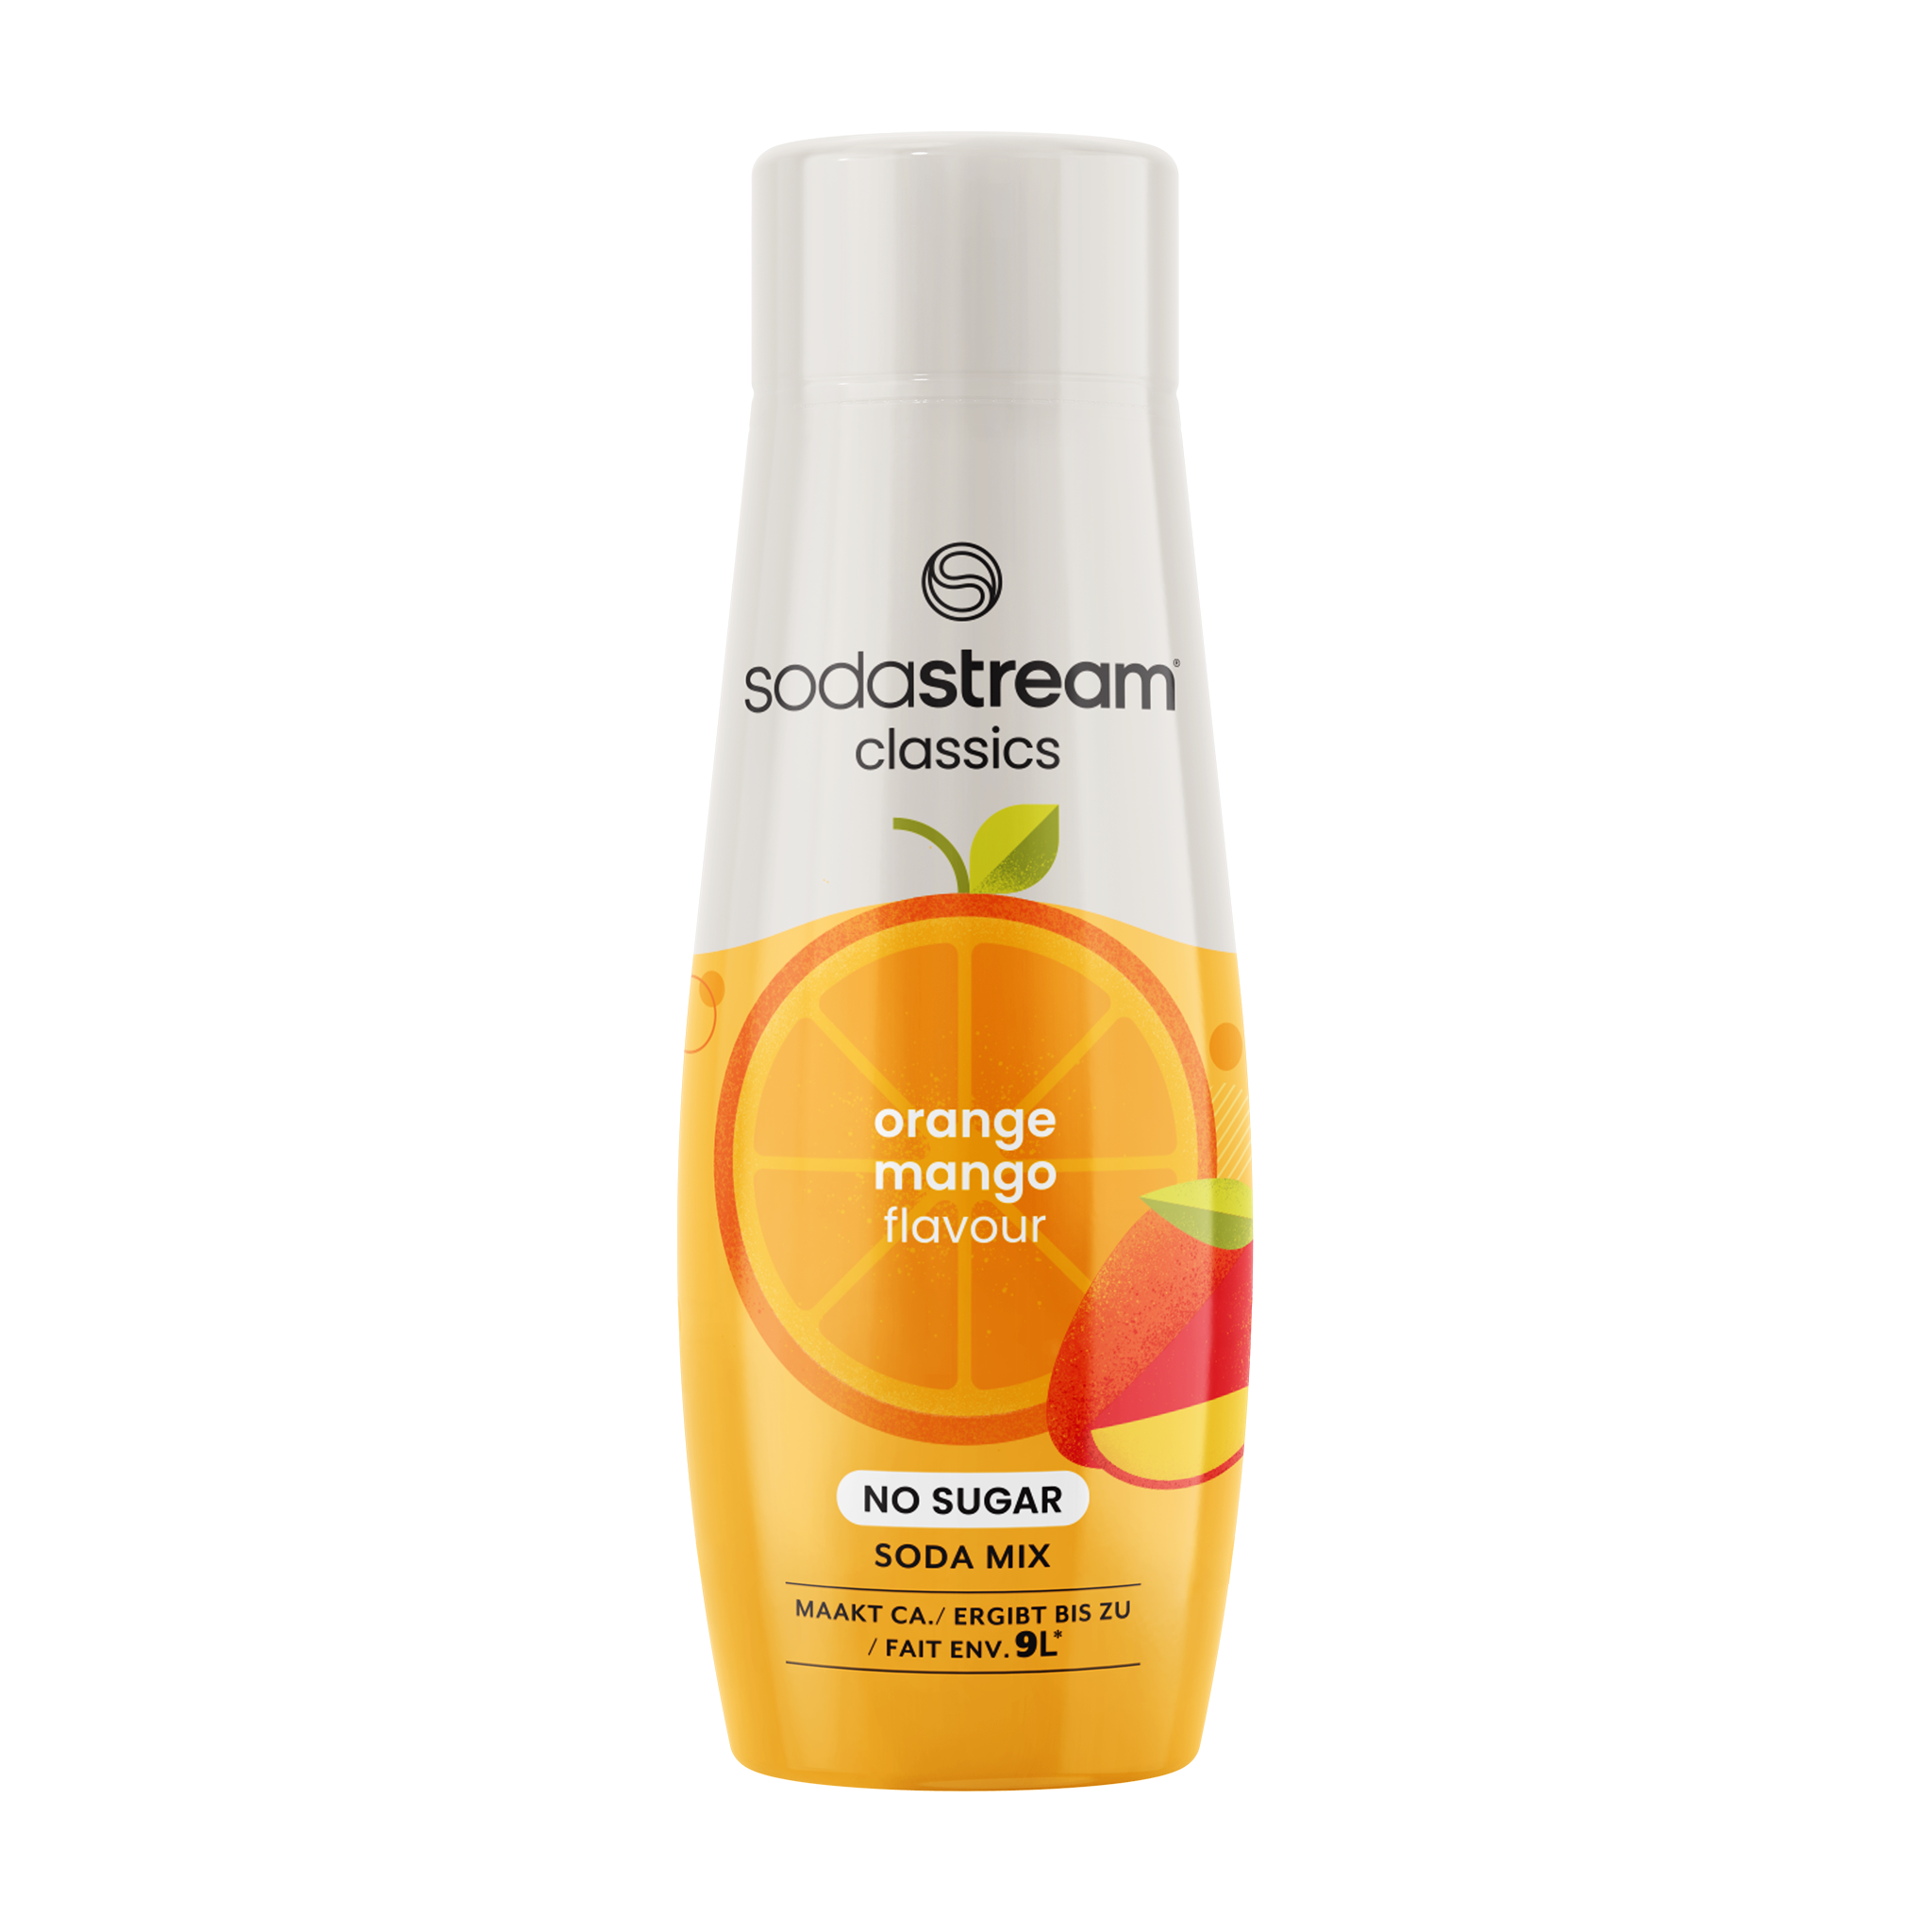 SodaStream Classics - Fruit flavours Orange Mango No Sugar sodastream